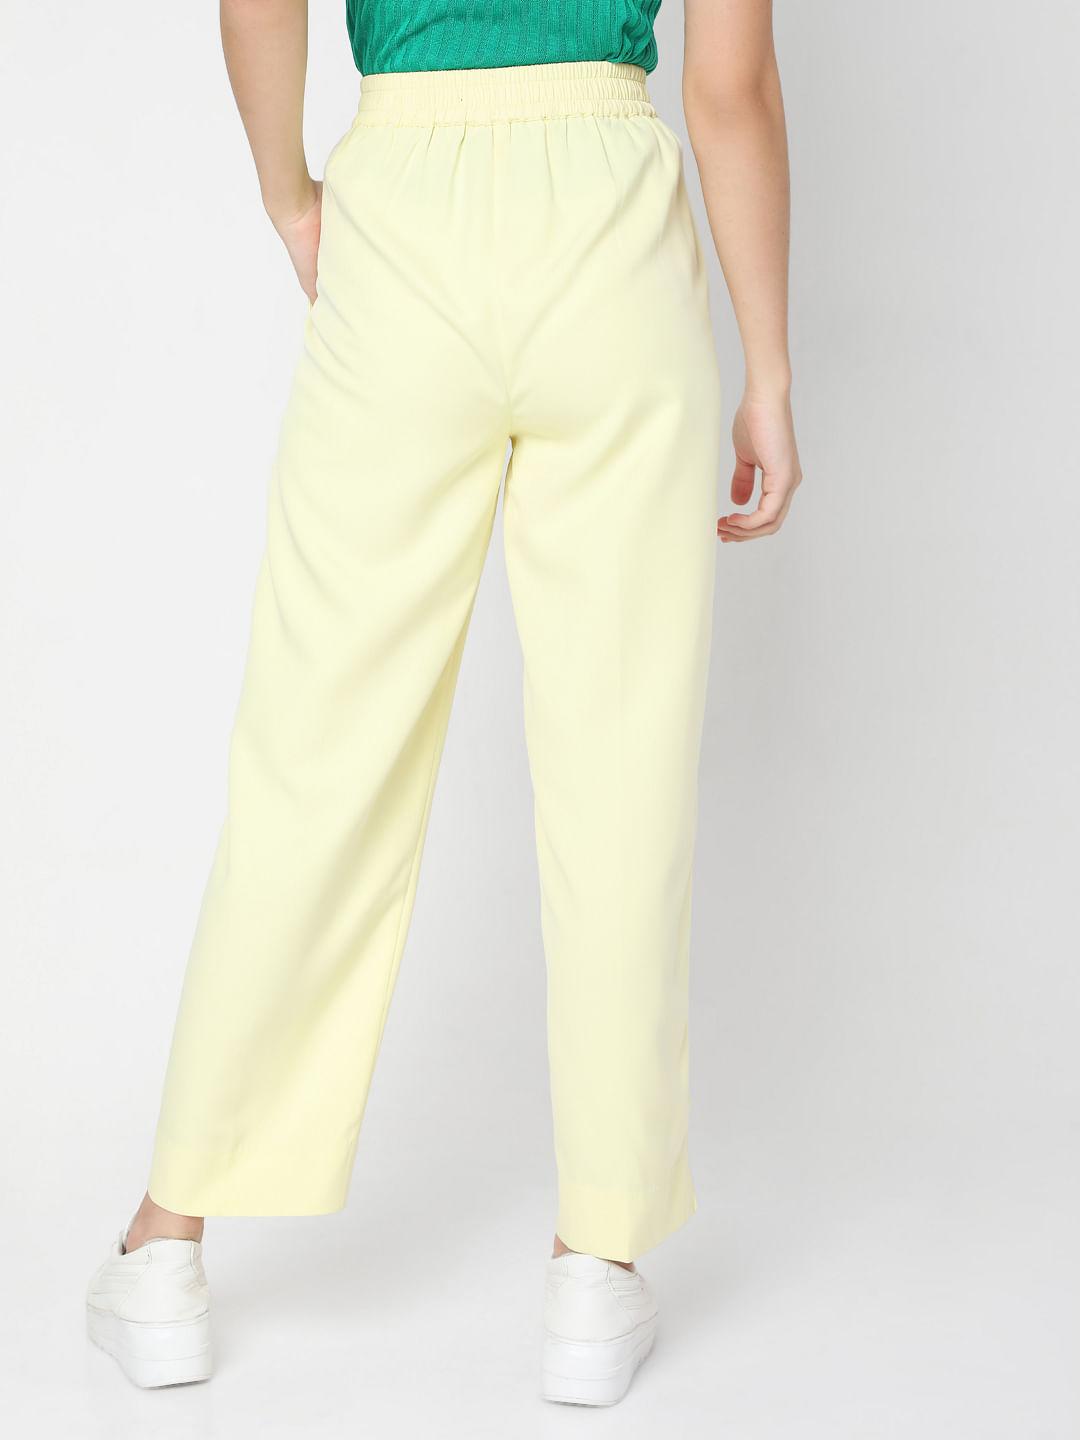 Cropped Linen Pants, Linen Trousers - Linenbee